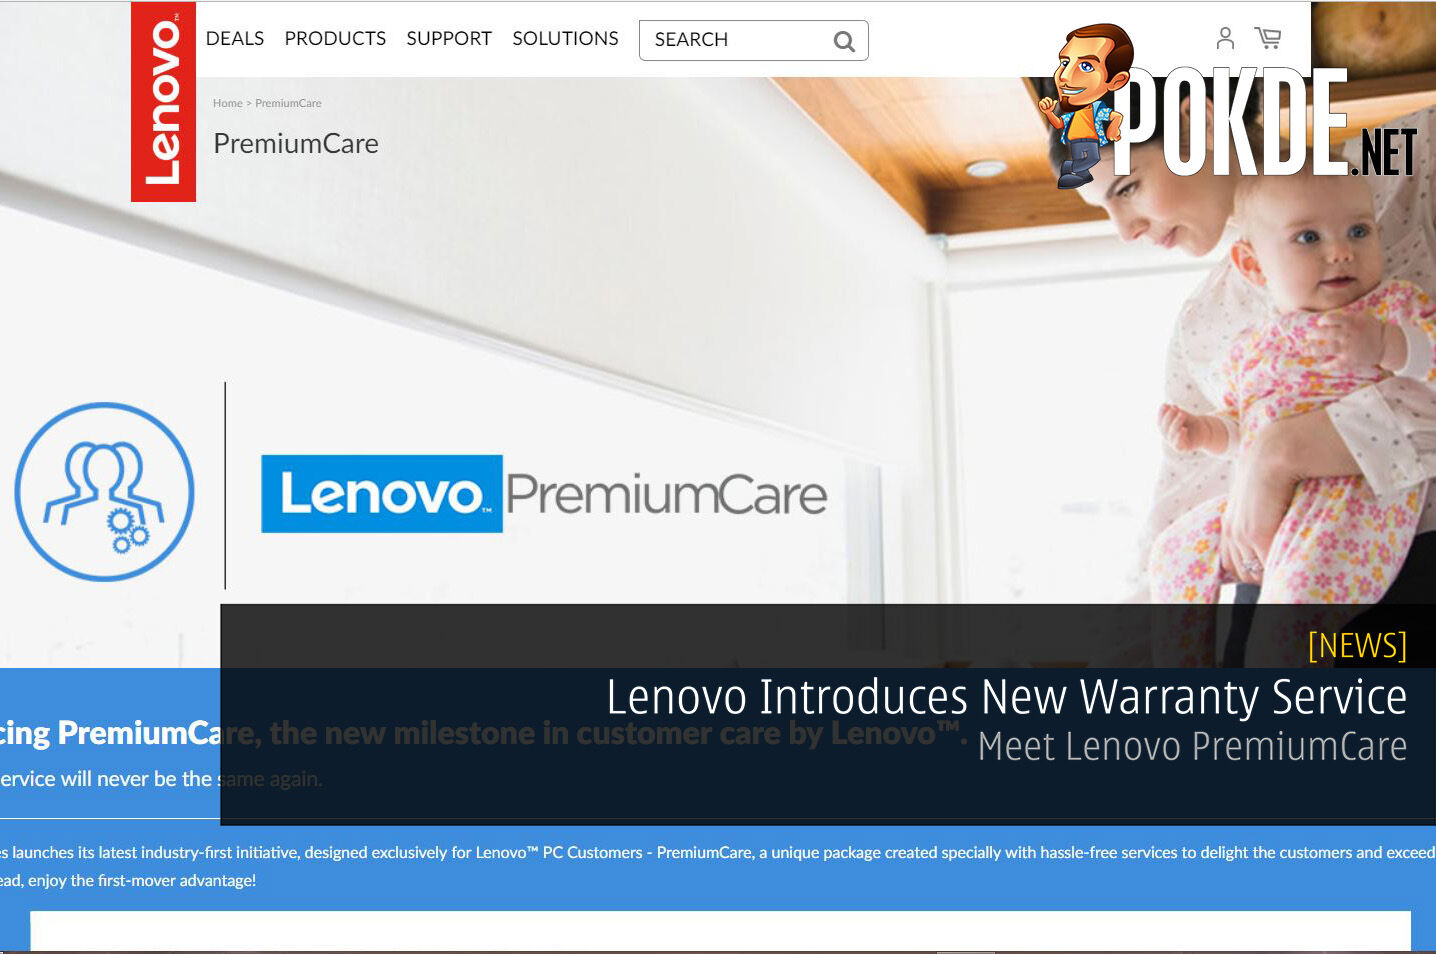 Lenovo Introduces New Warranty Service - Meet Lenovo PremiumCare 31